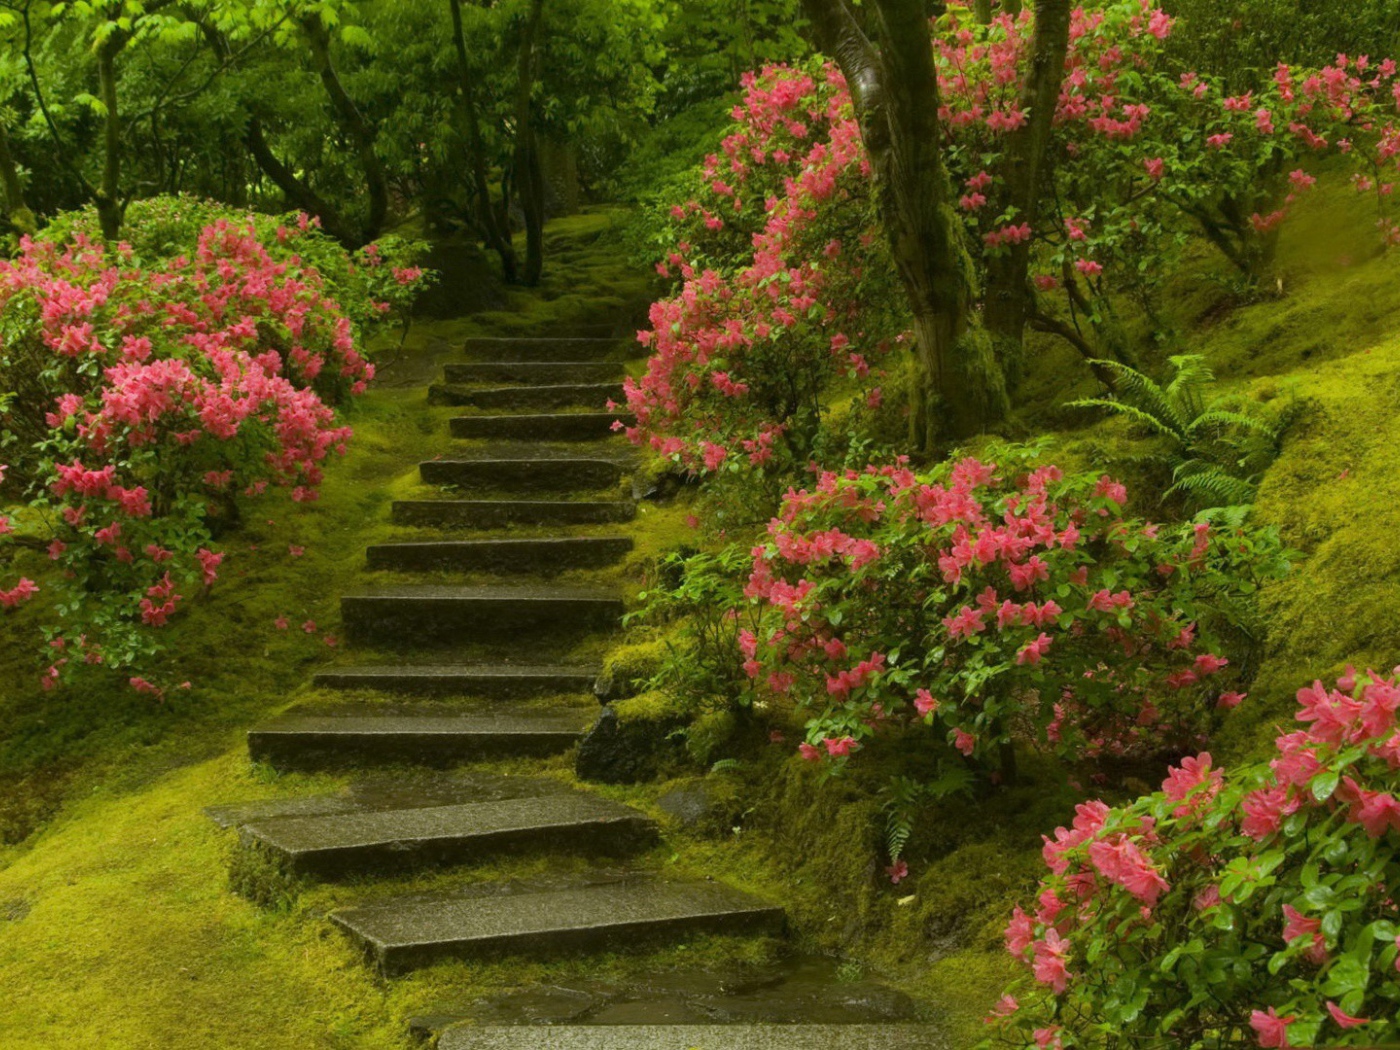 Каменная лестница в цветущем саду